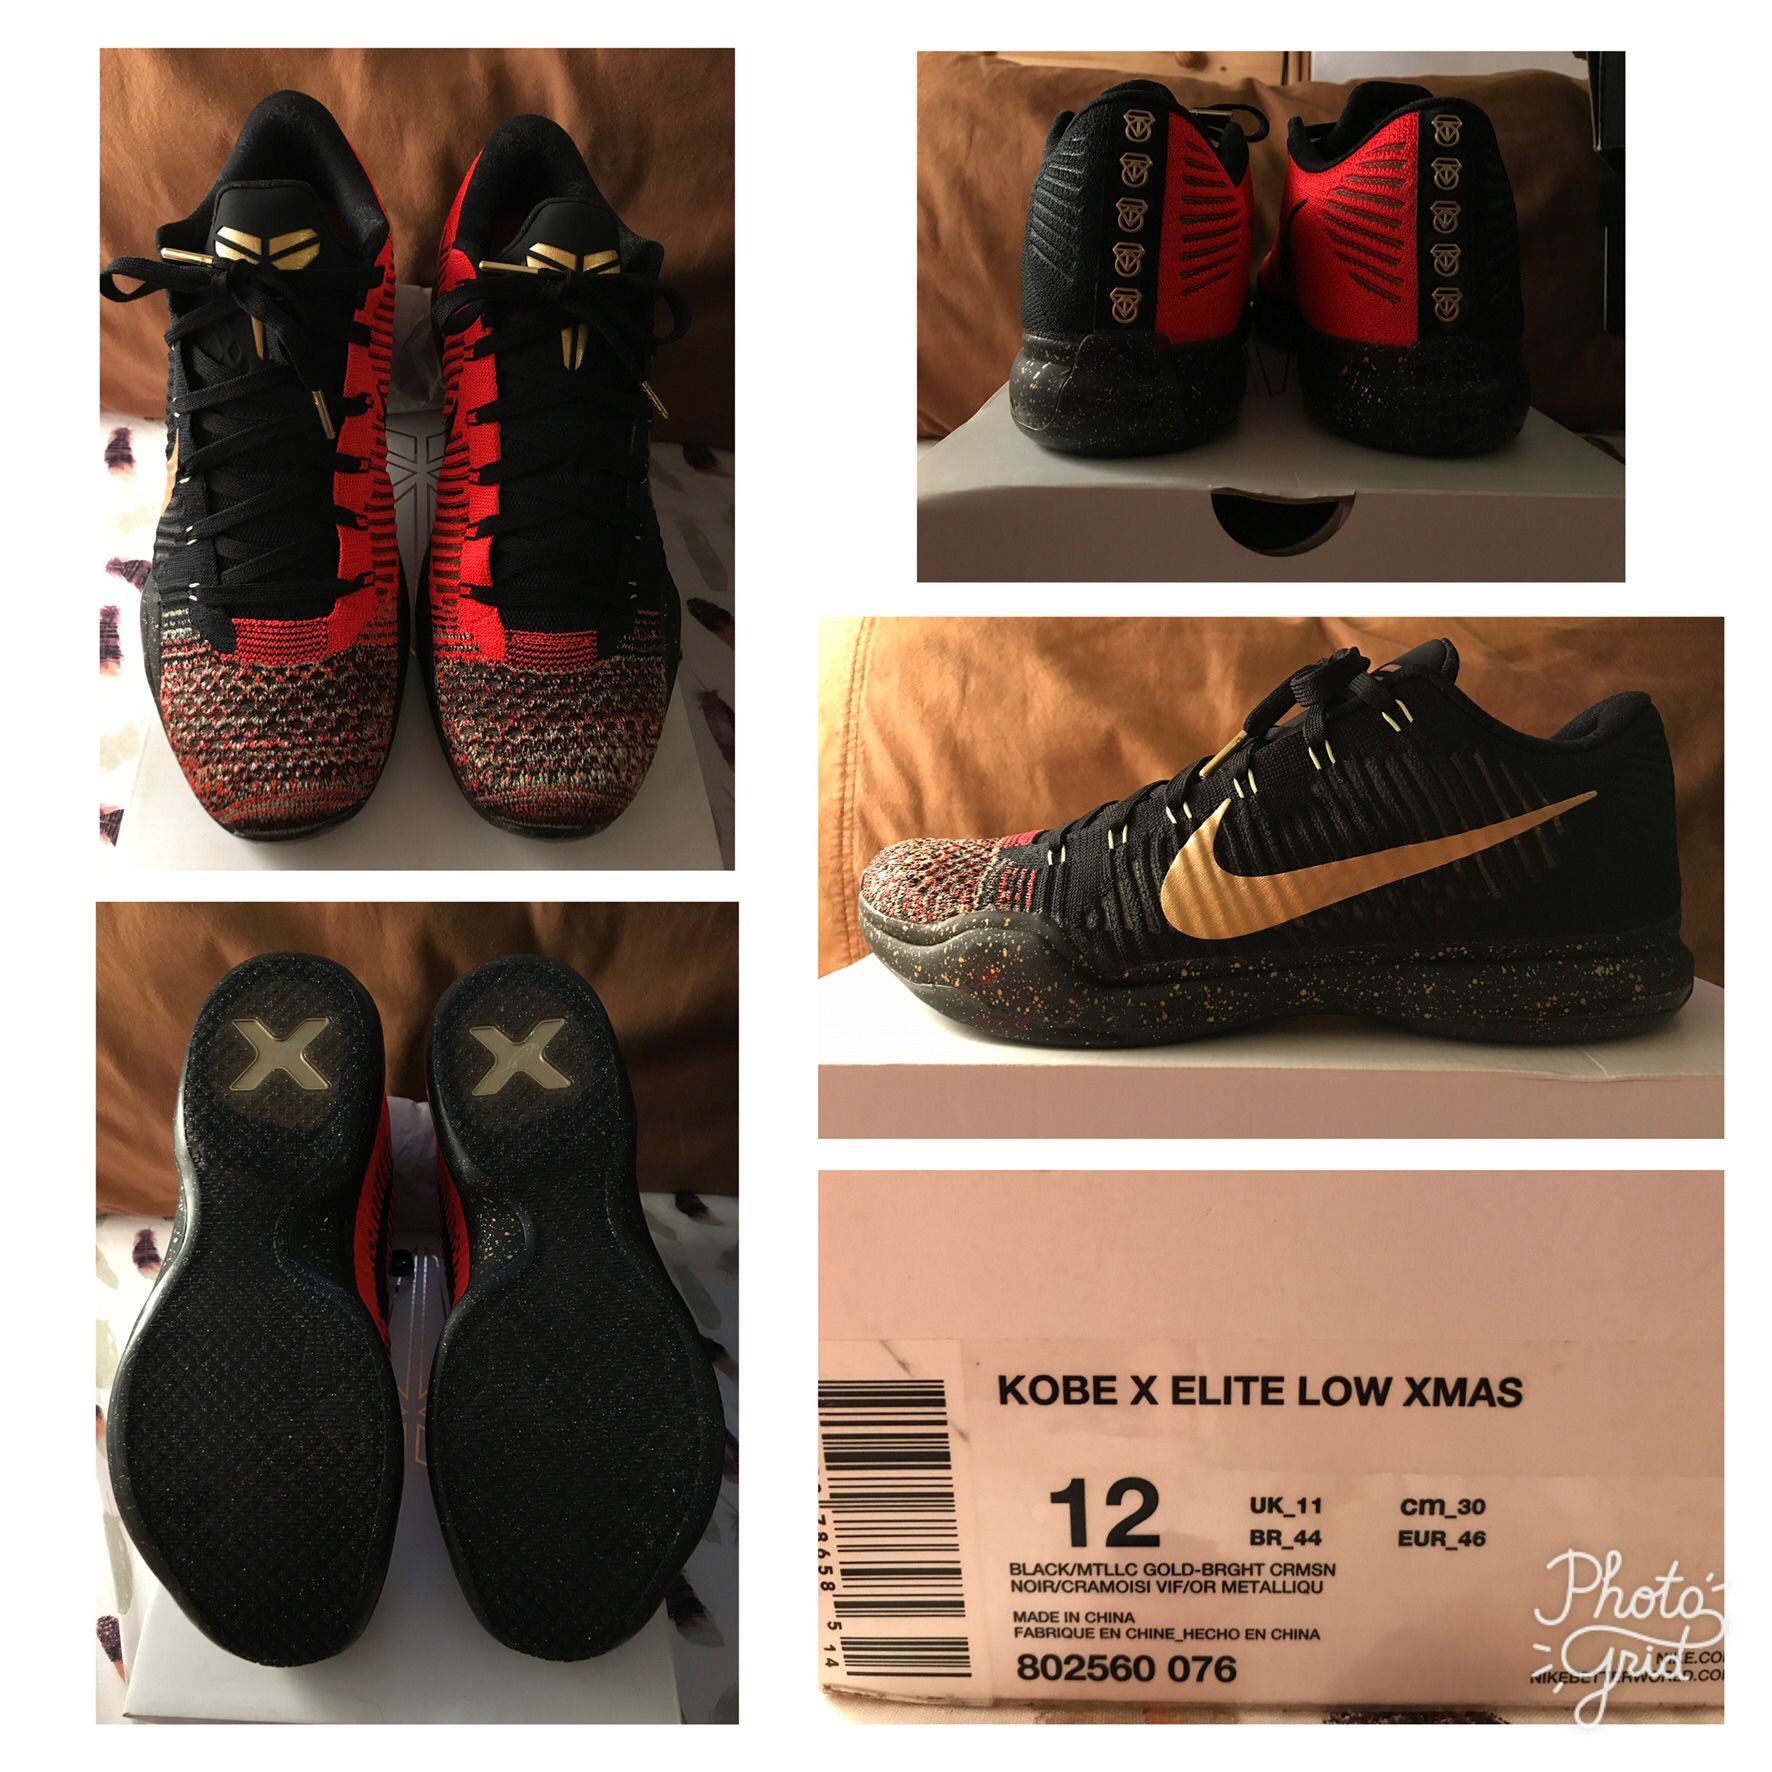 Nike Kobe x elite Christmas size 12 (lebron, kyrie, adidas, kobe, reebok, kd, cp3, pg)